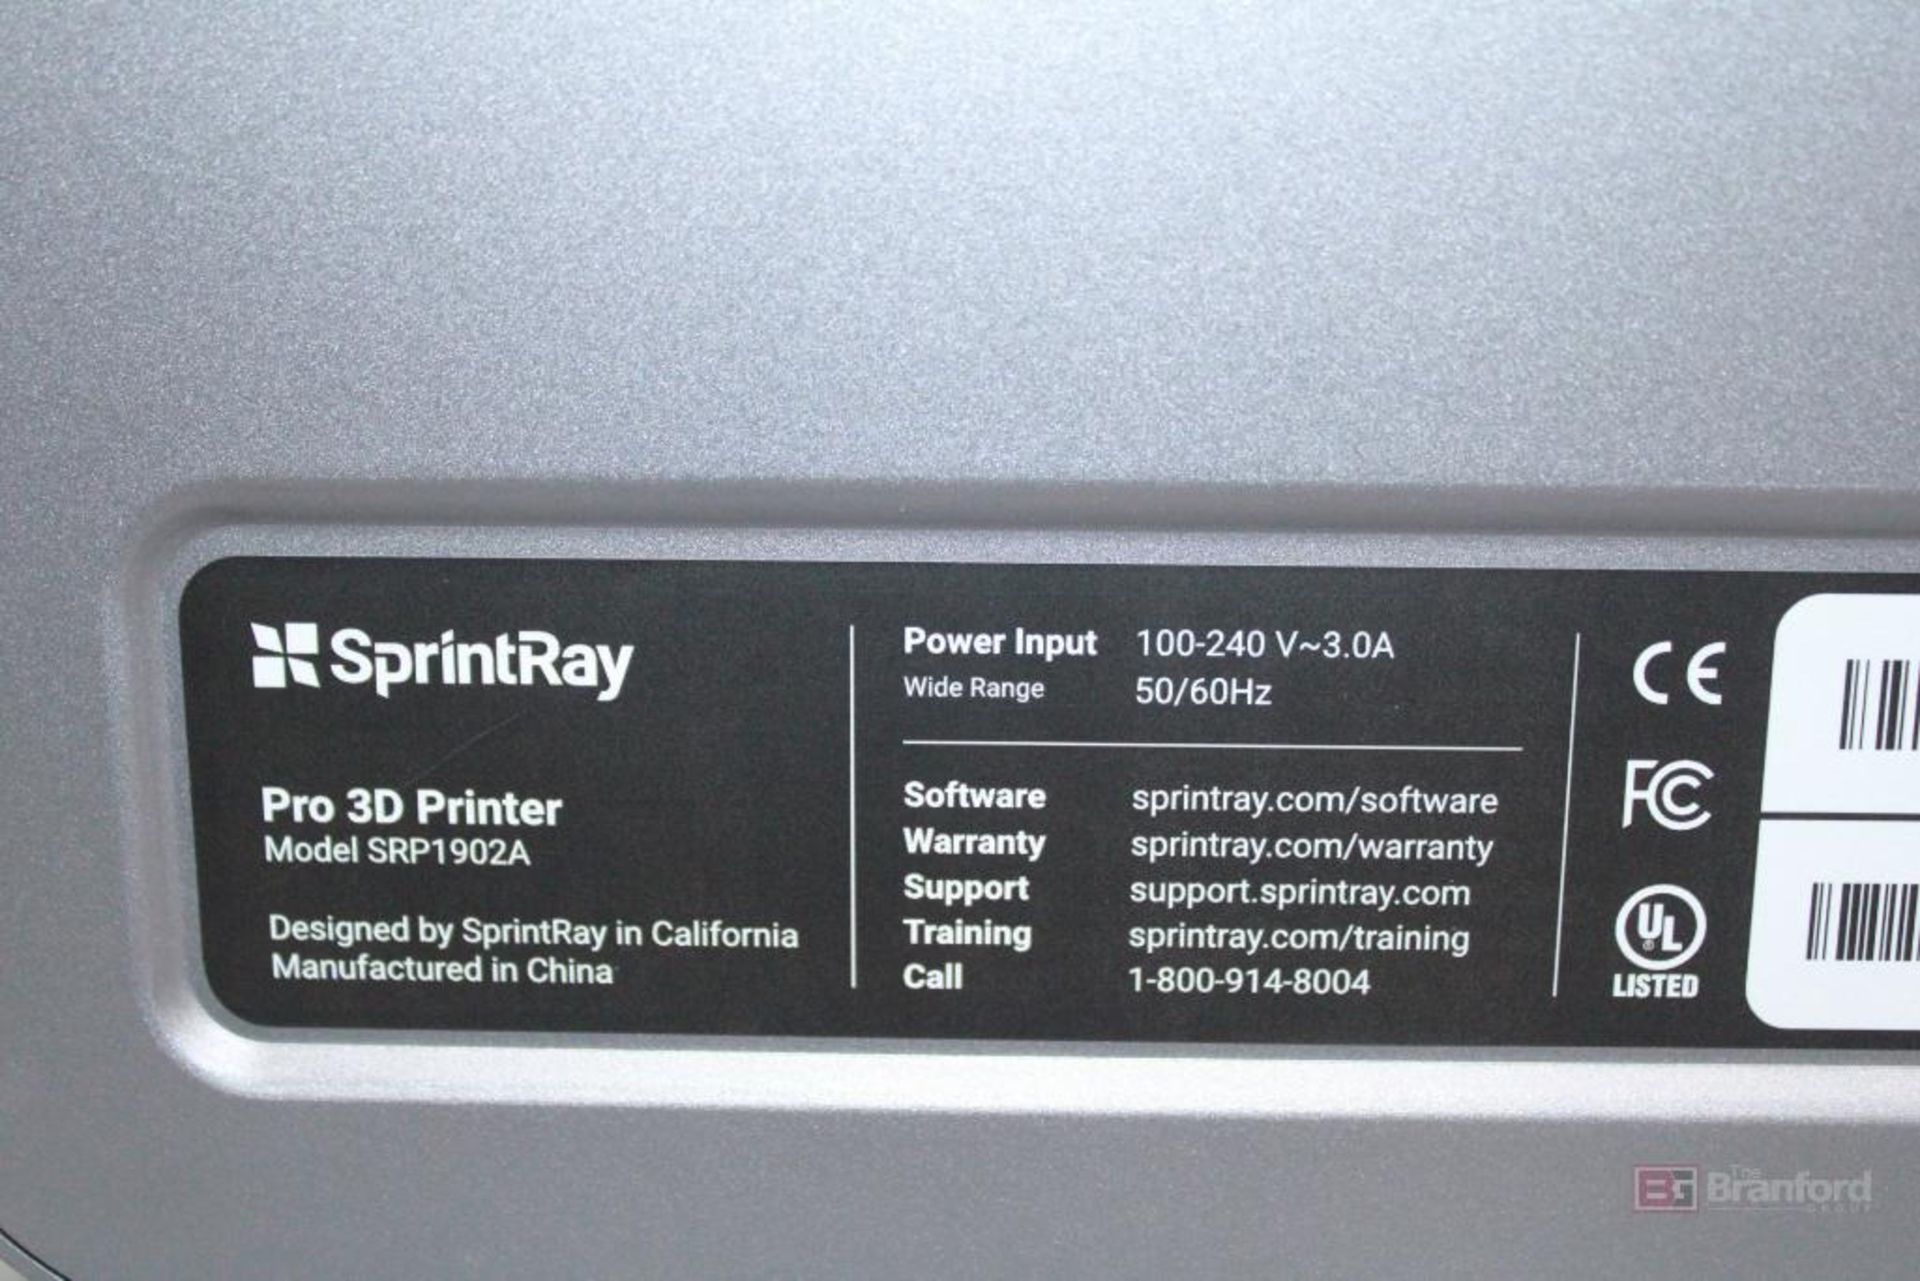 SprintRay Pro 3D Printer Model SRP1902A - Image 3 of 3